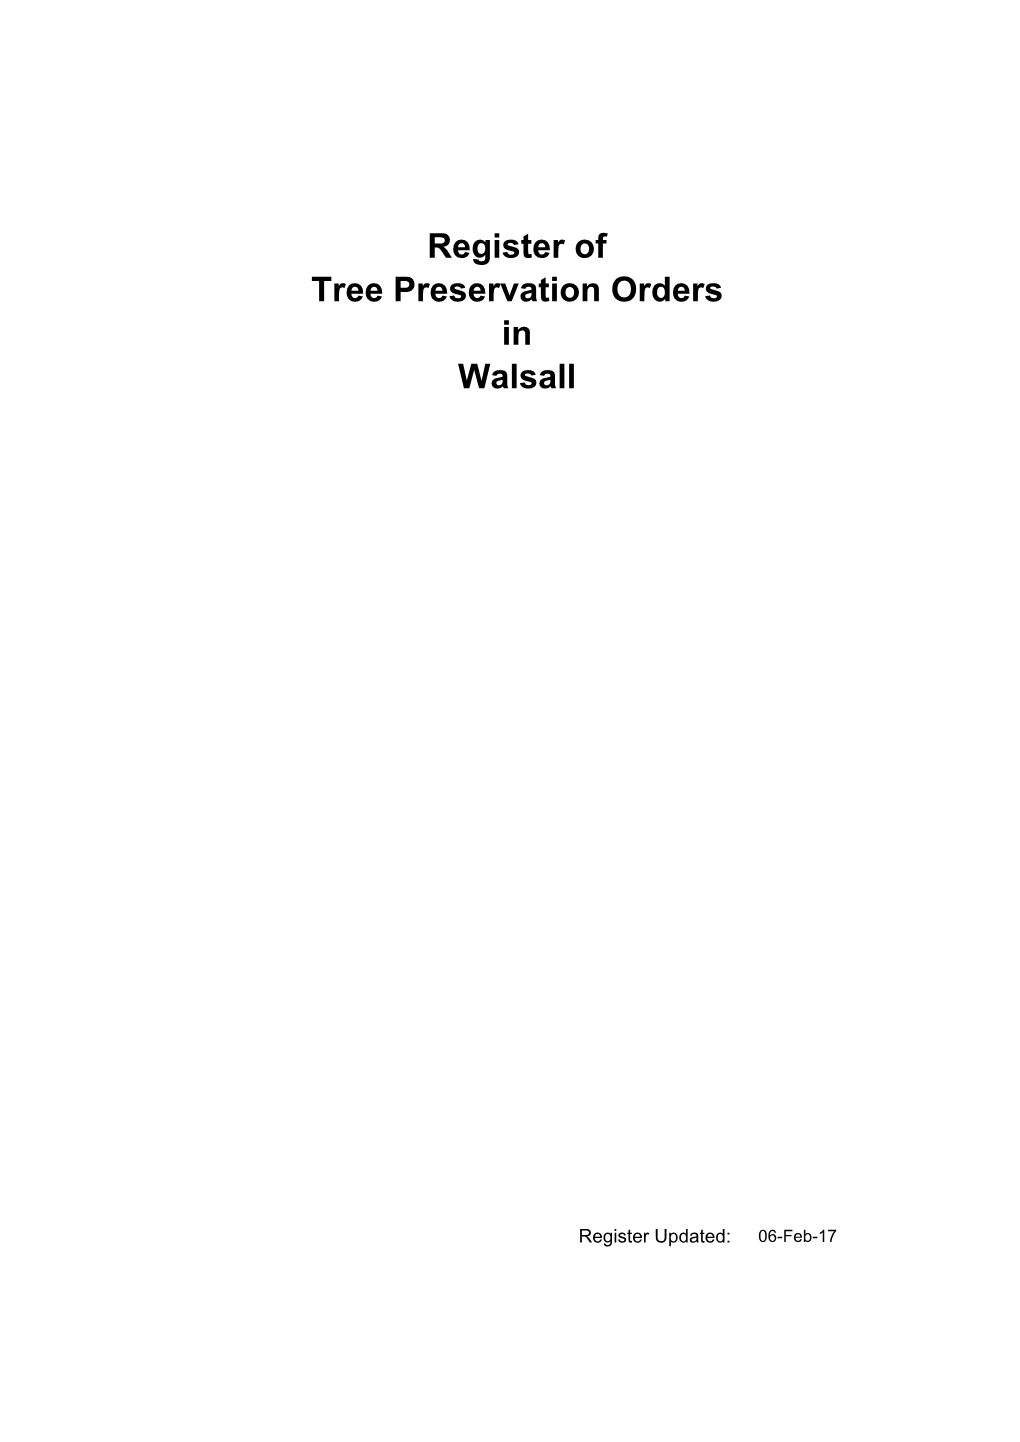 Register of Tree Preservation Orders in Walsall